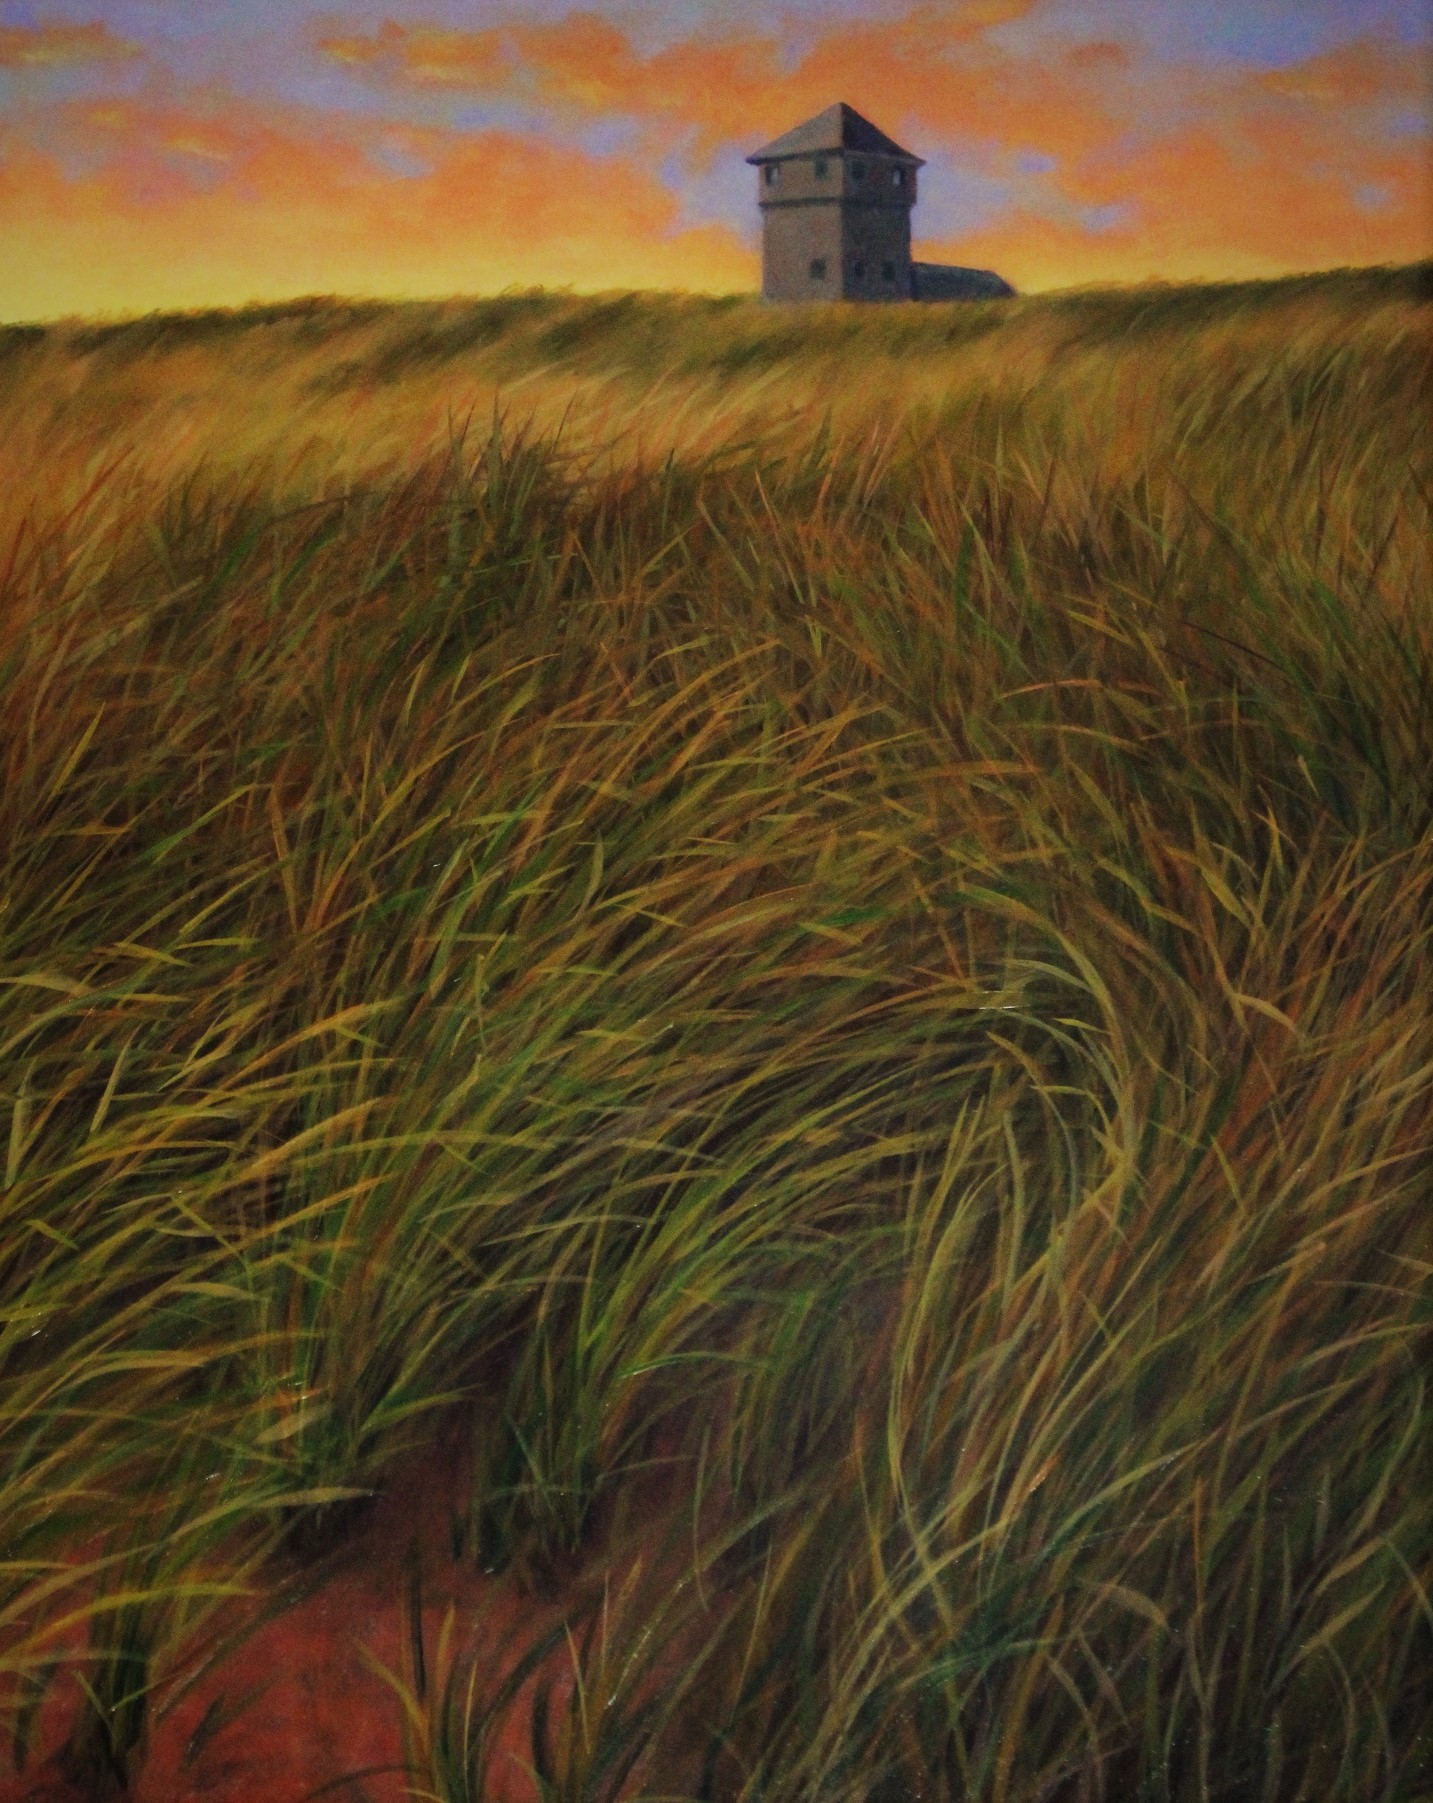 Cape grasses, by Kristine Villeneuve-Topor